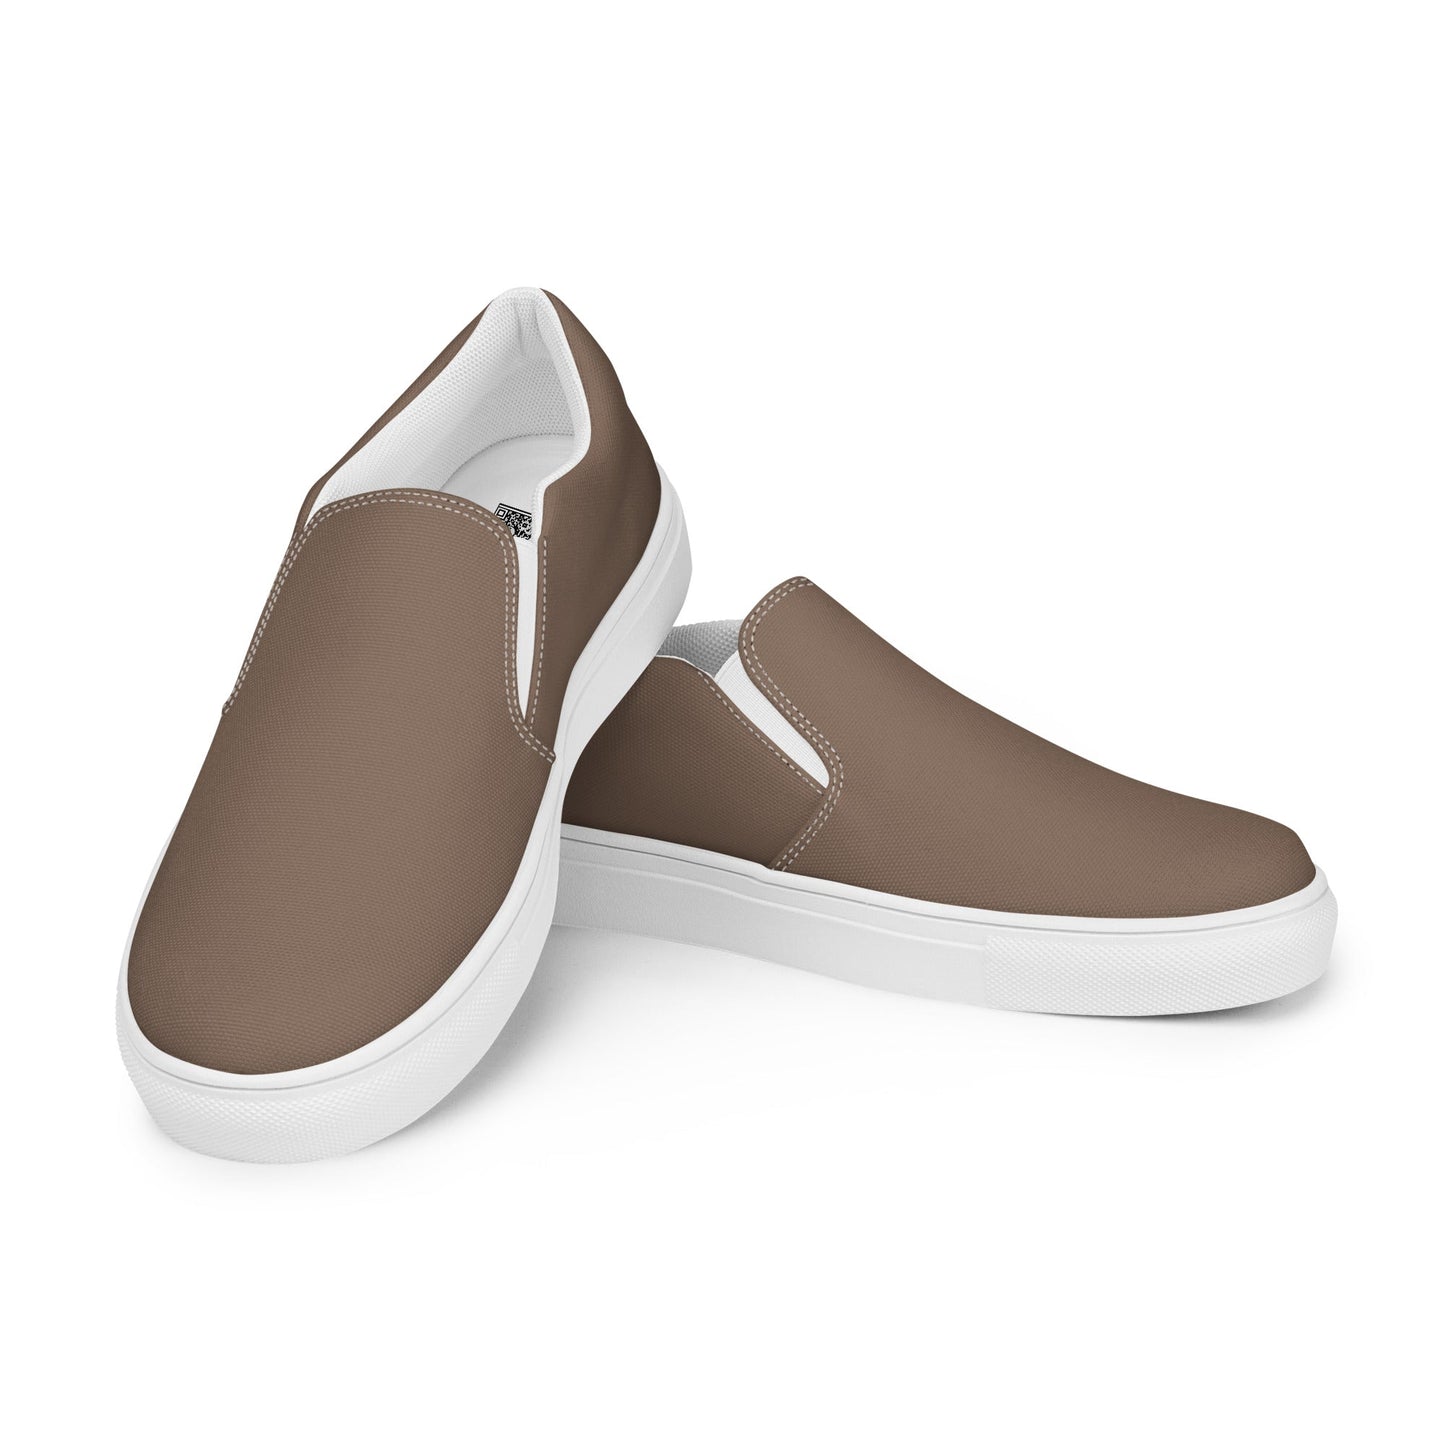 klasneakers Women’s slip-on canvas shoes - Latte Tan